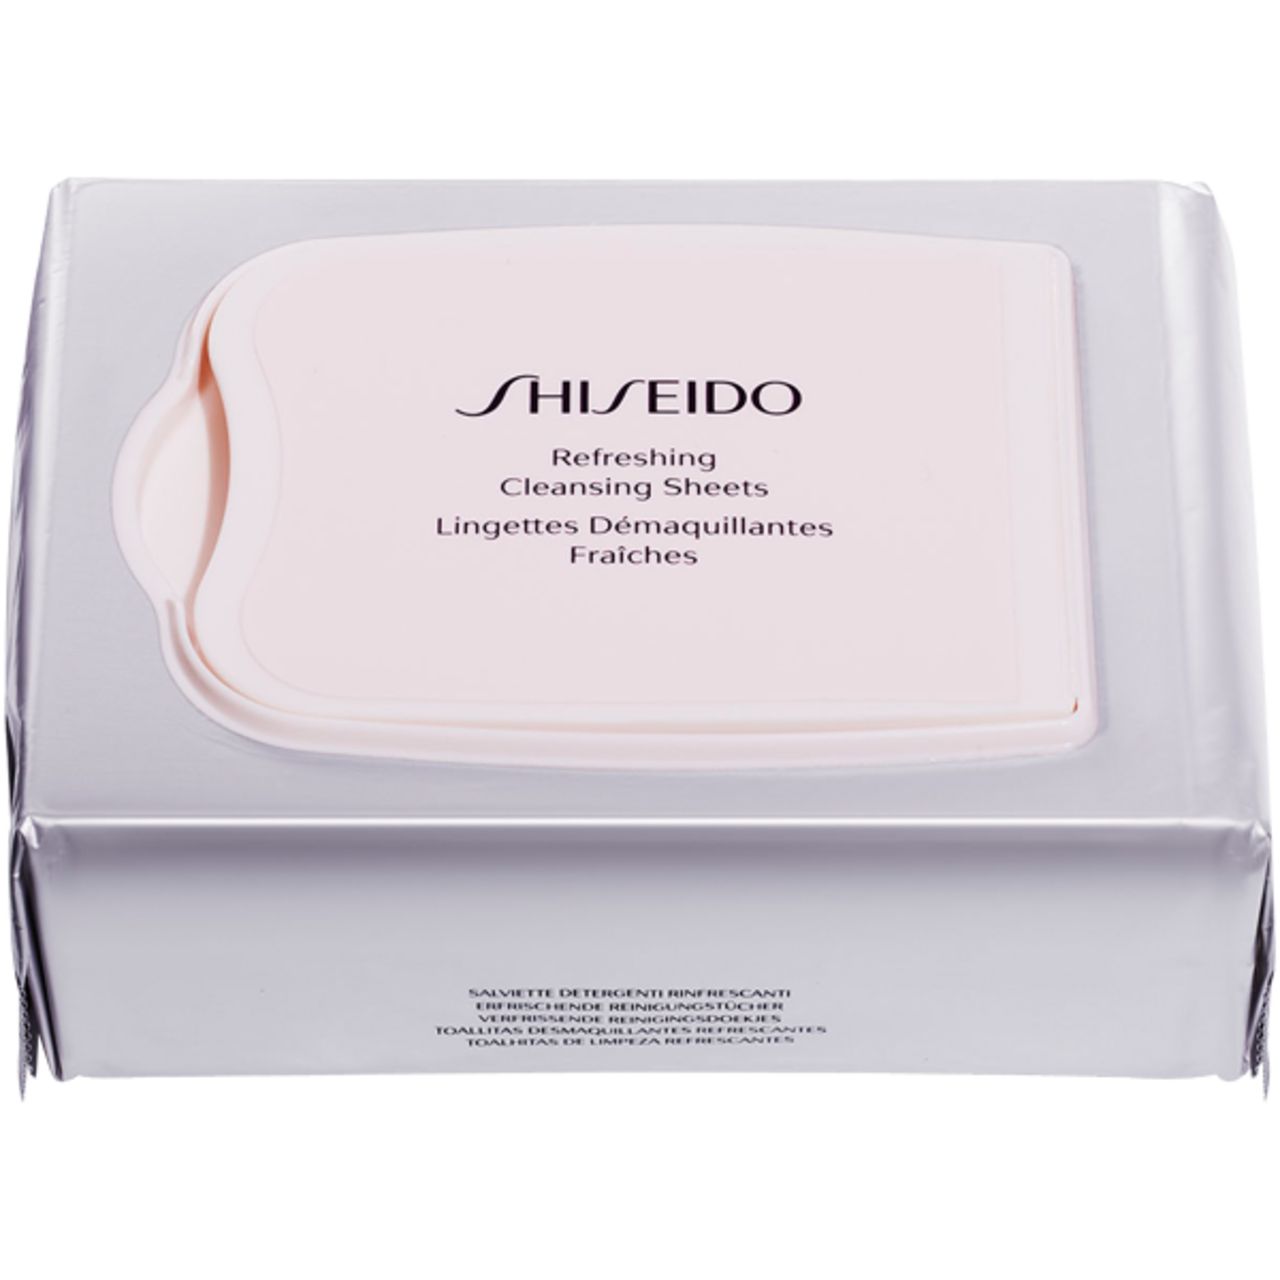 Shiseido, Generic Skincare Refreshing Cleansing Sheets